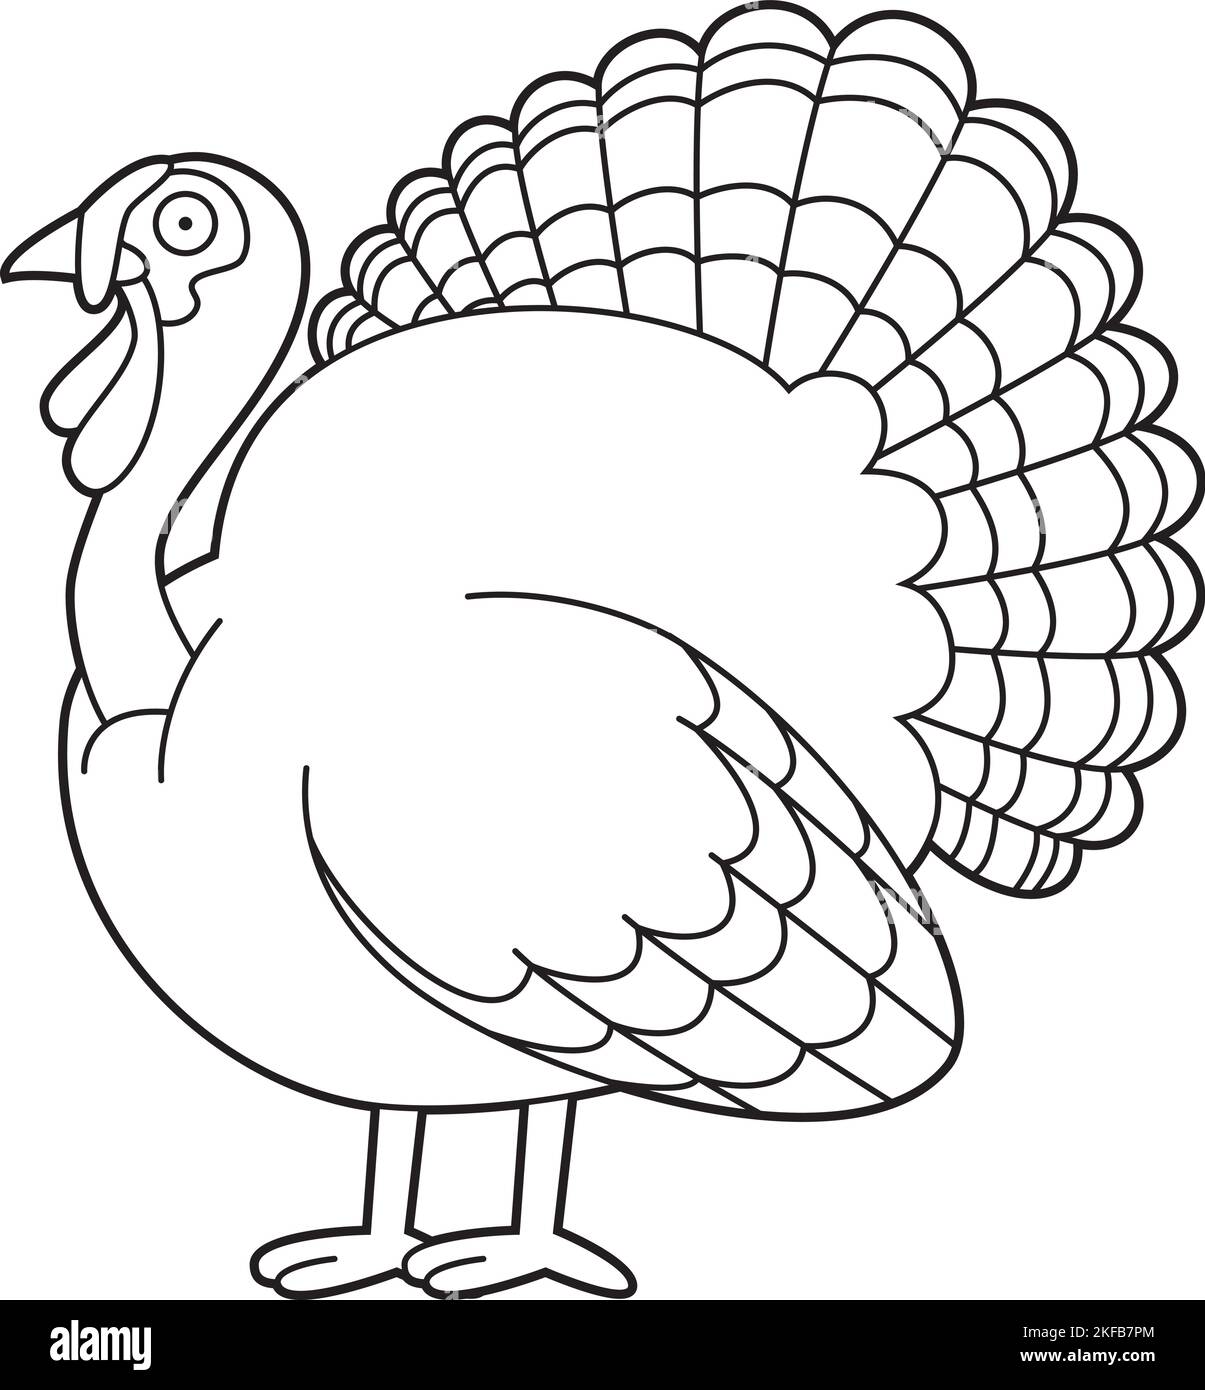 Easy coloring cartoon vector illustration of a turkey Stock Vector